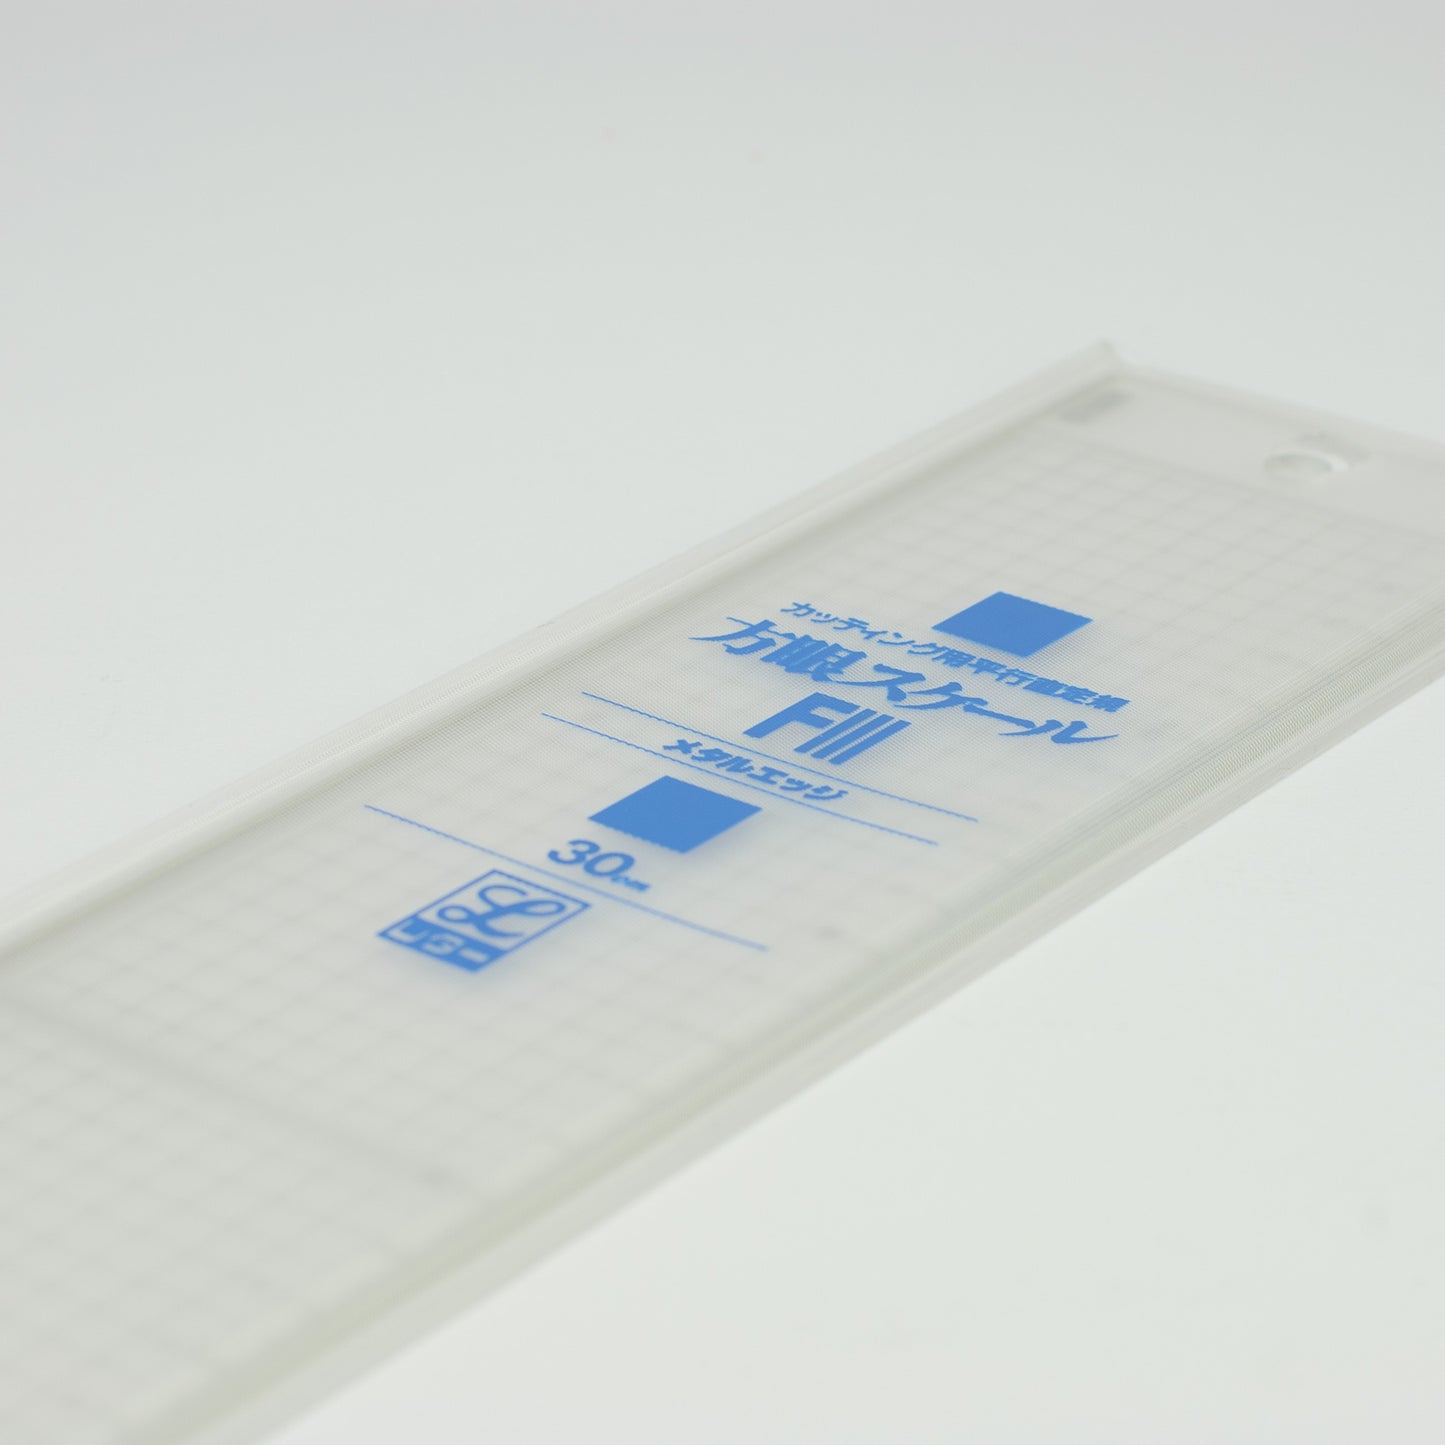 Japanese Transparent Measure Ruler with Metal